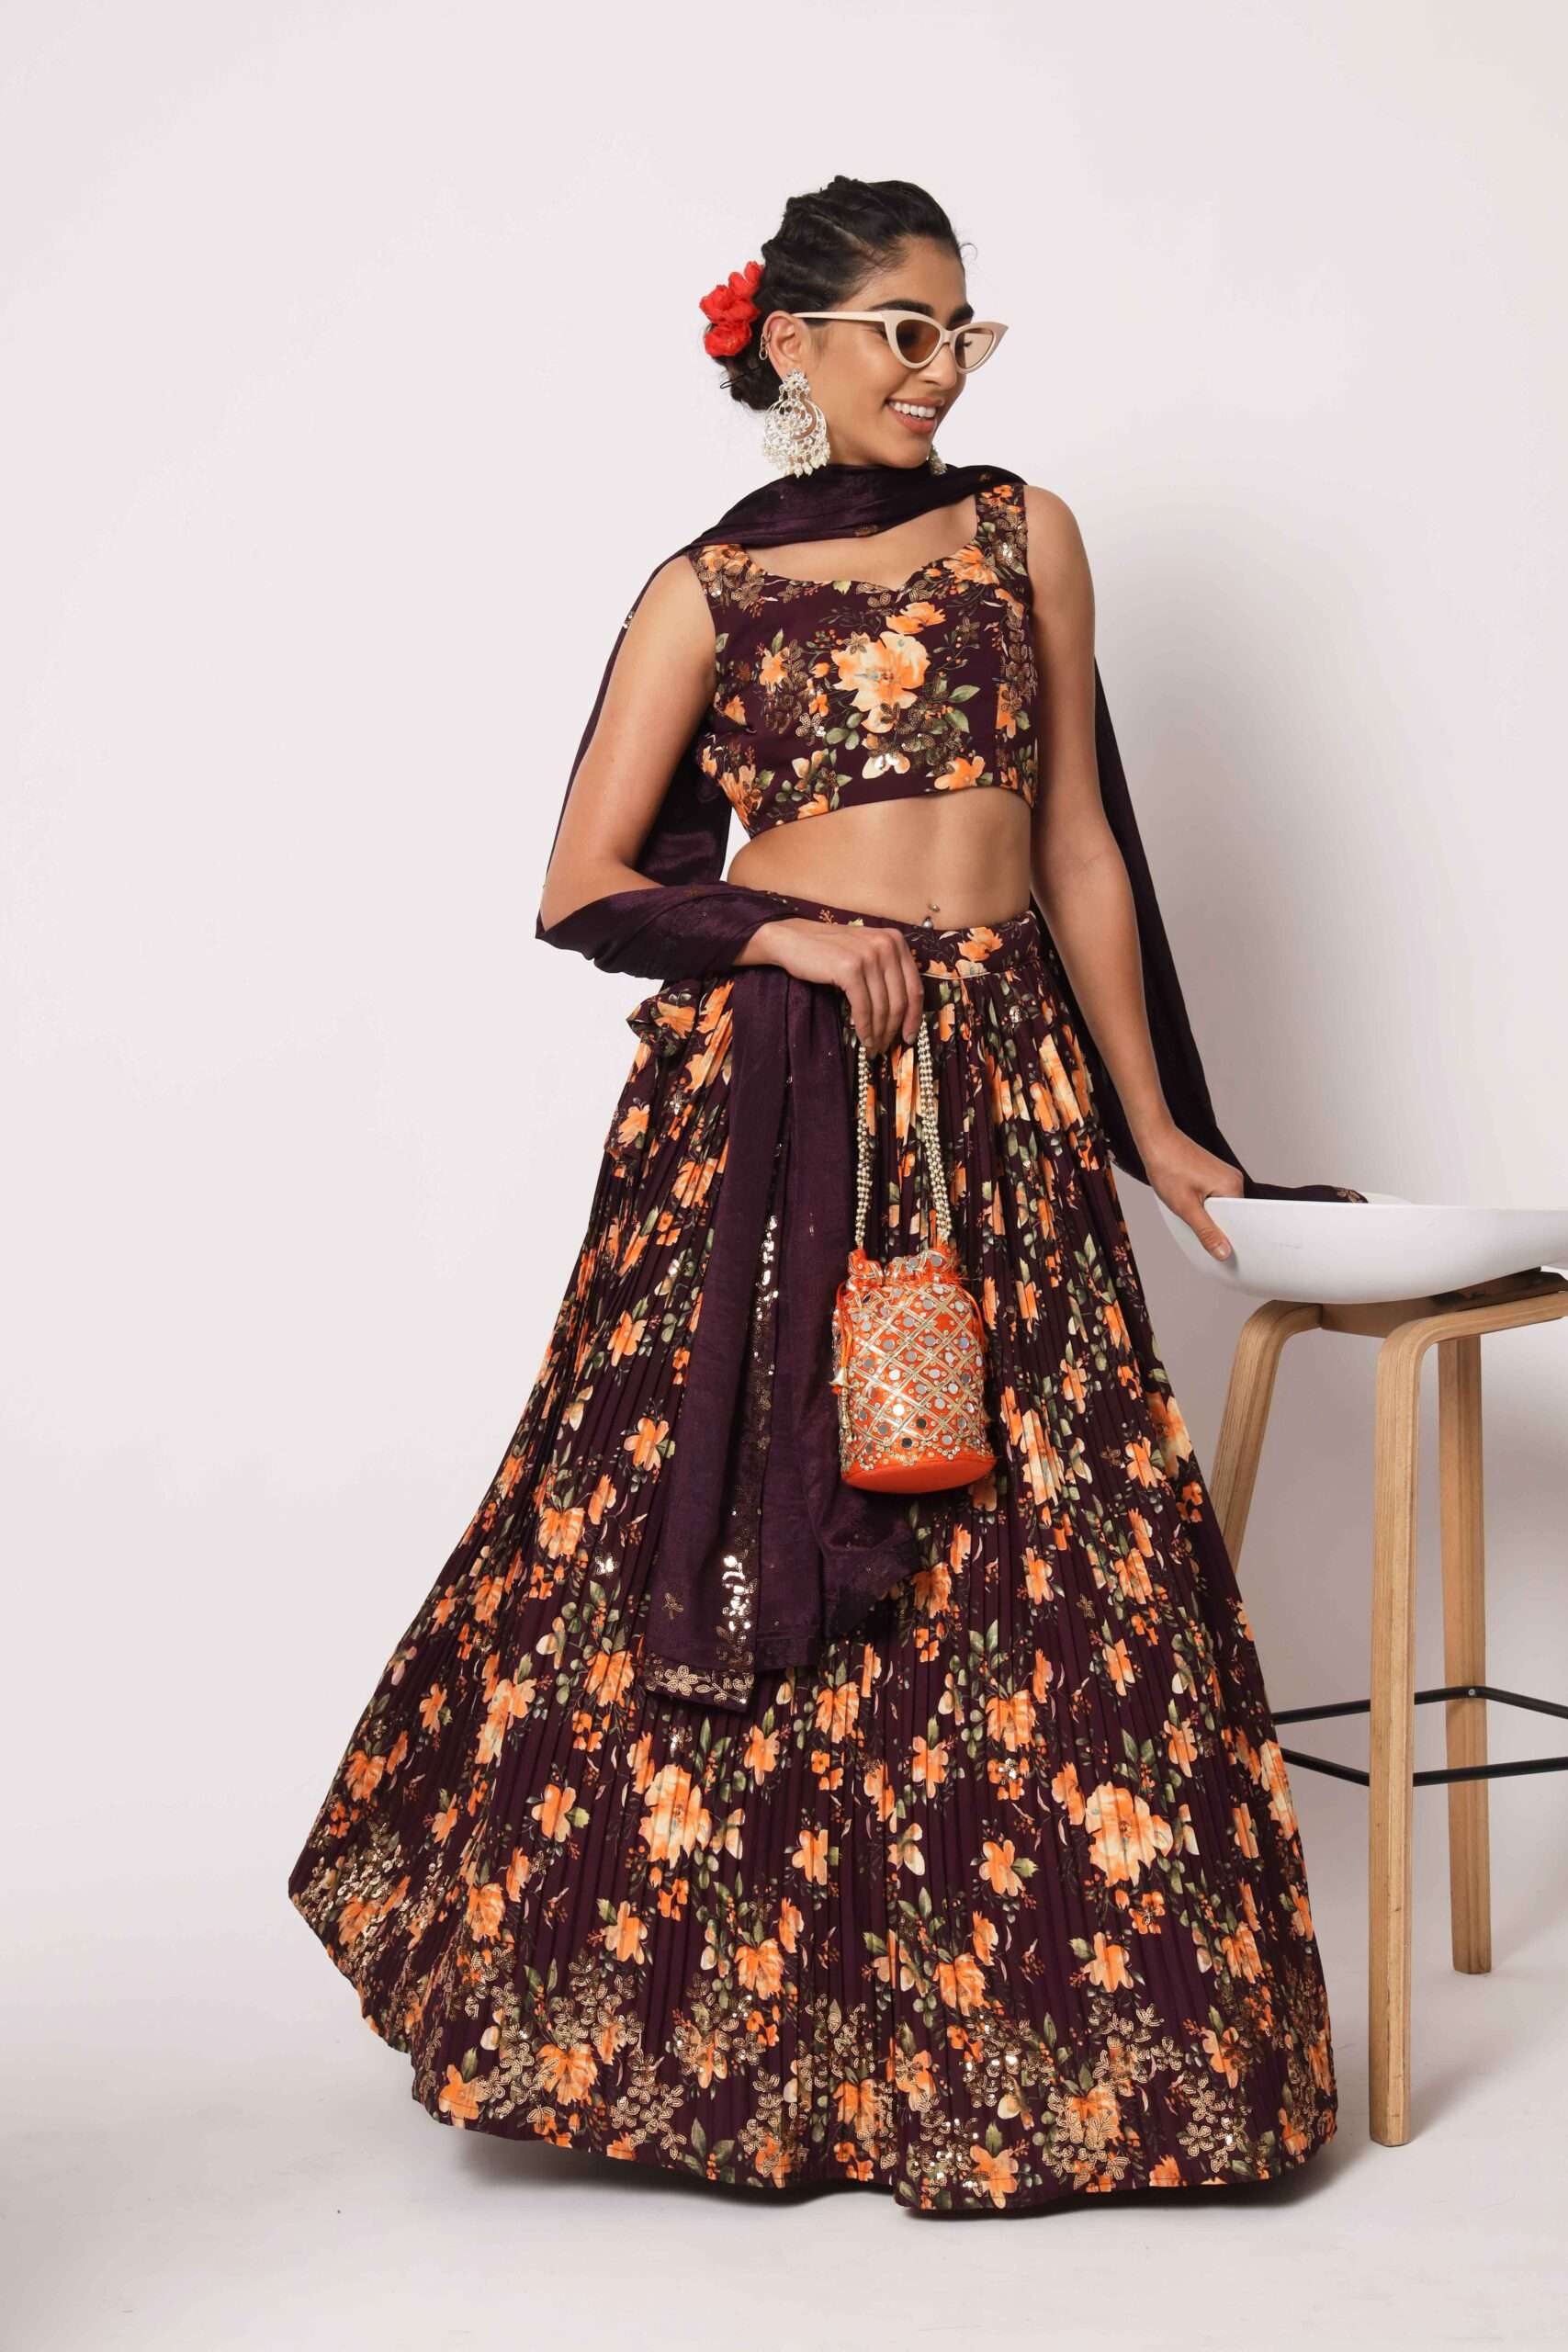 Art Silk Bustier Lehenga With Woven Bandhani Shisha Embroidery Blouse